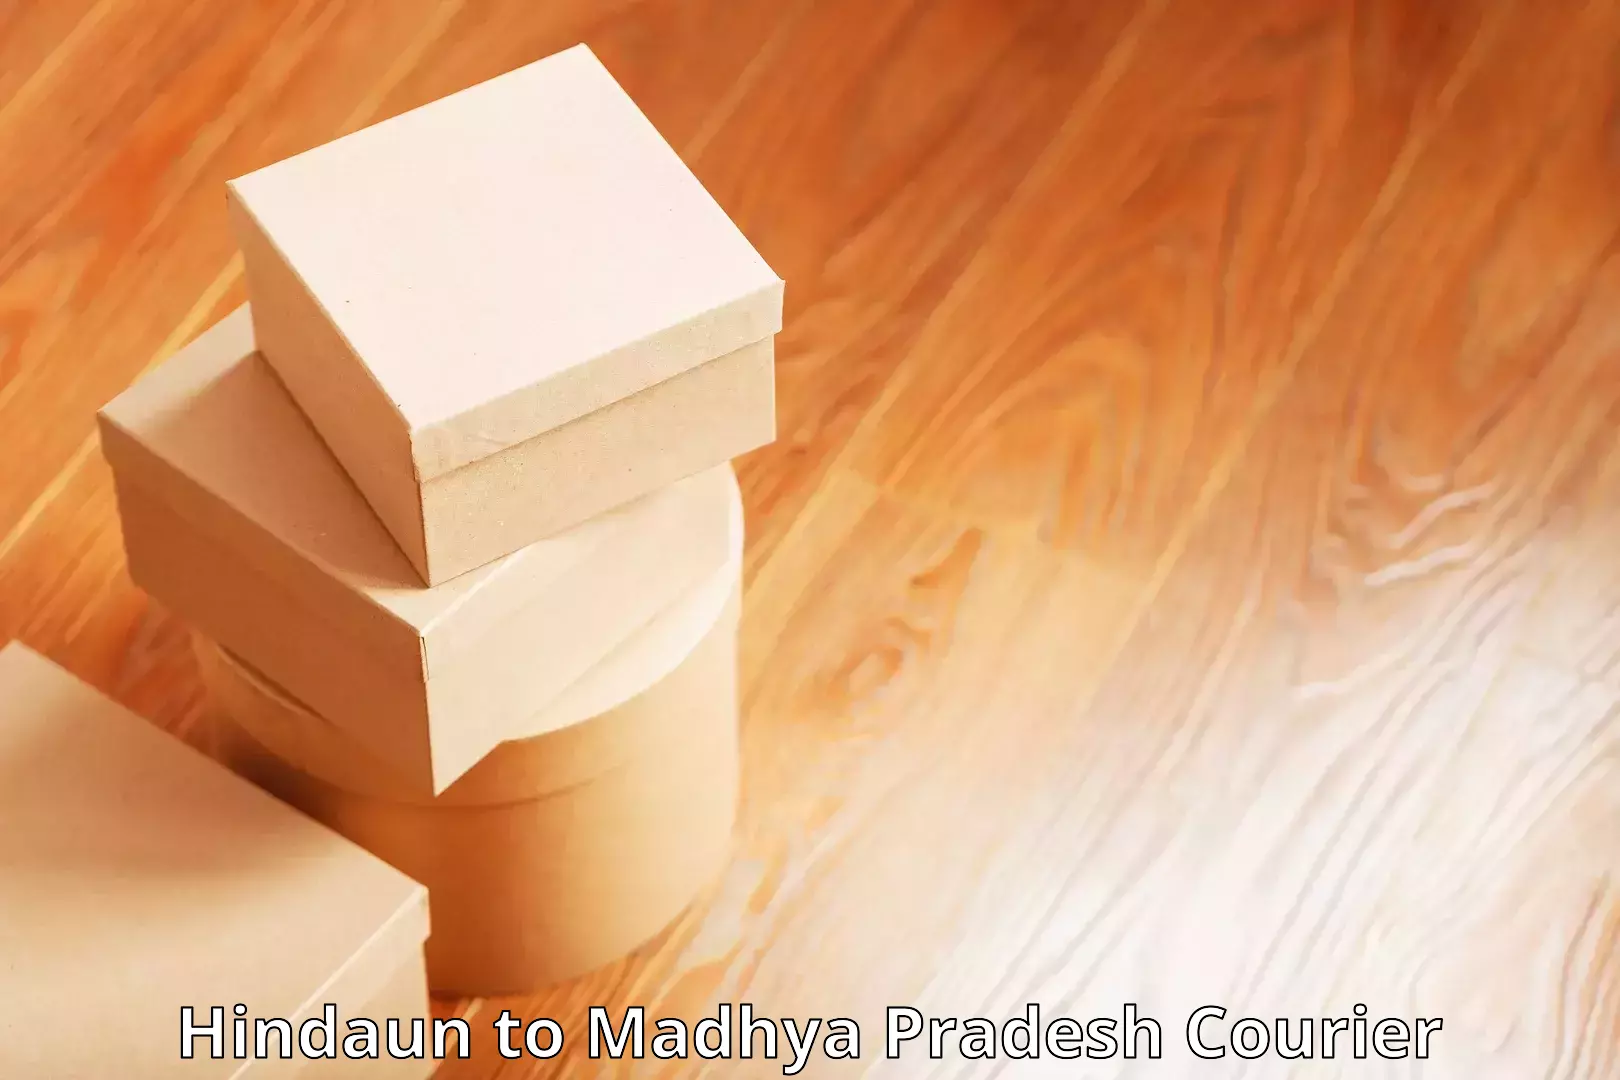 Courier service innovation Hindaun to Madhya Pradesh